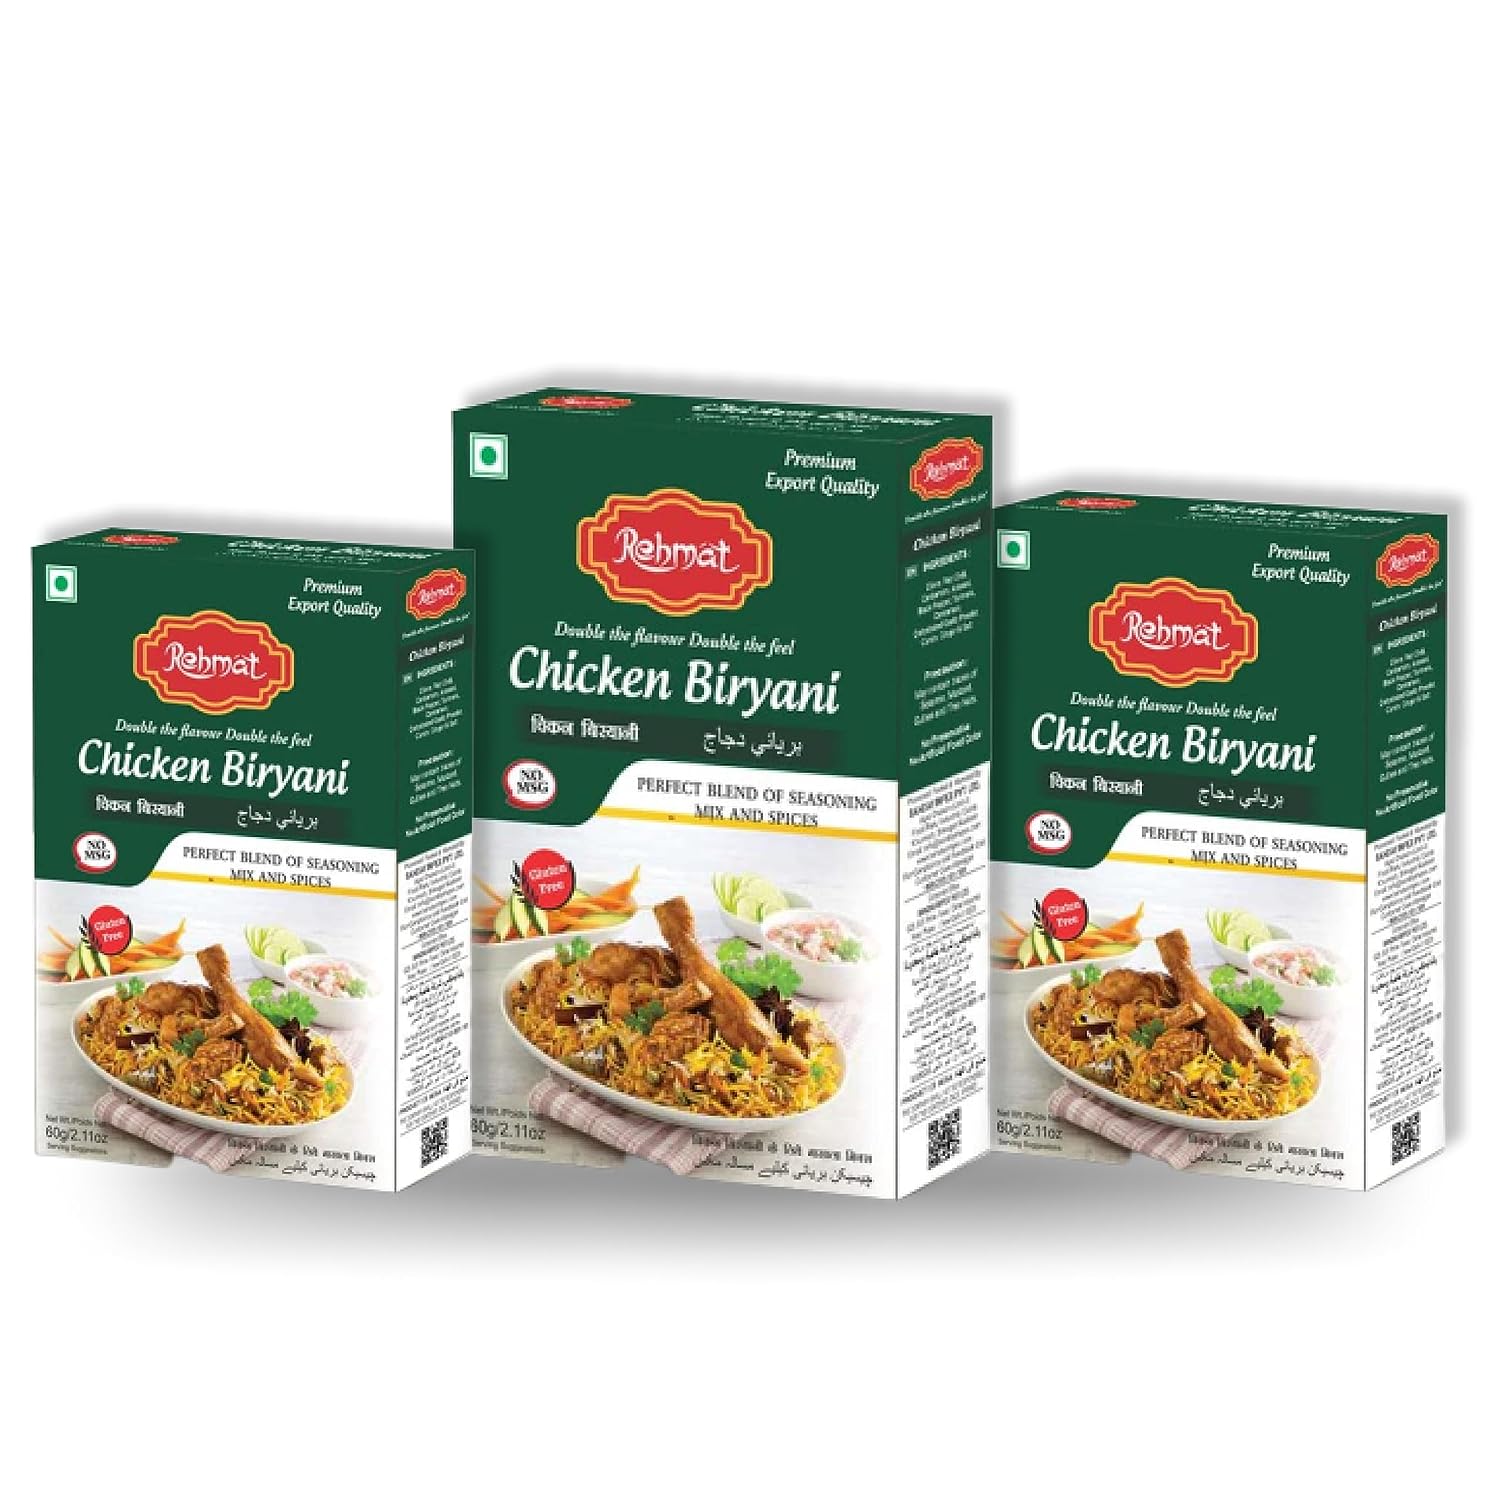 Rehmat Chicken Biryani Masala Powder, Exotic Spices Blend Easy & Ready to Cook Masala Ideal for Chicken Biryani, 60 gm